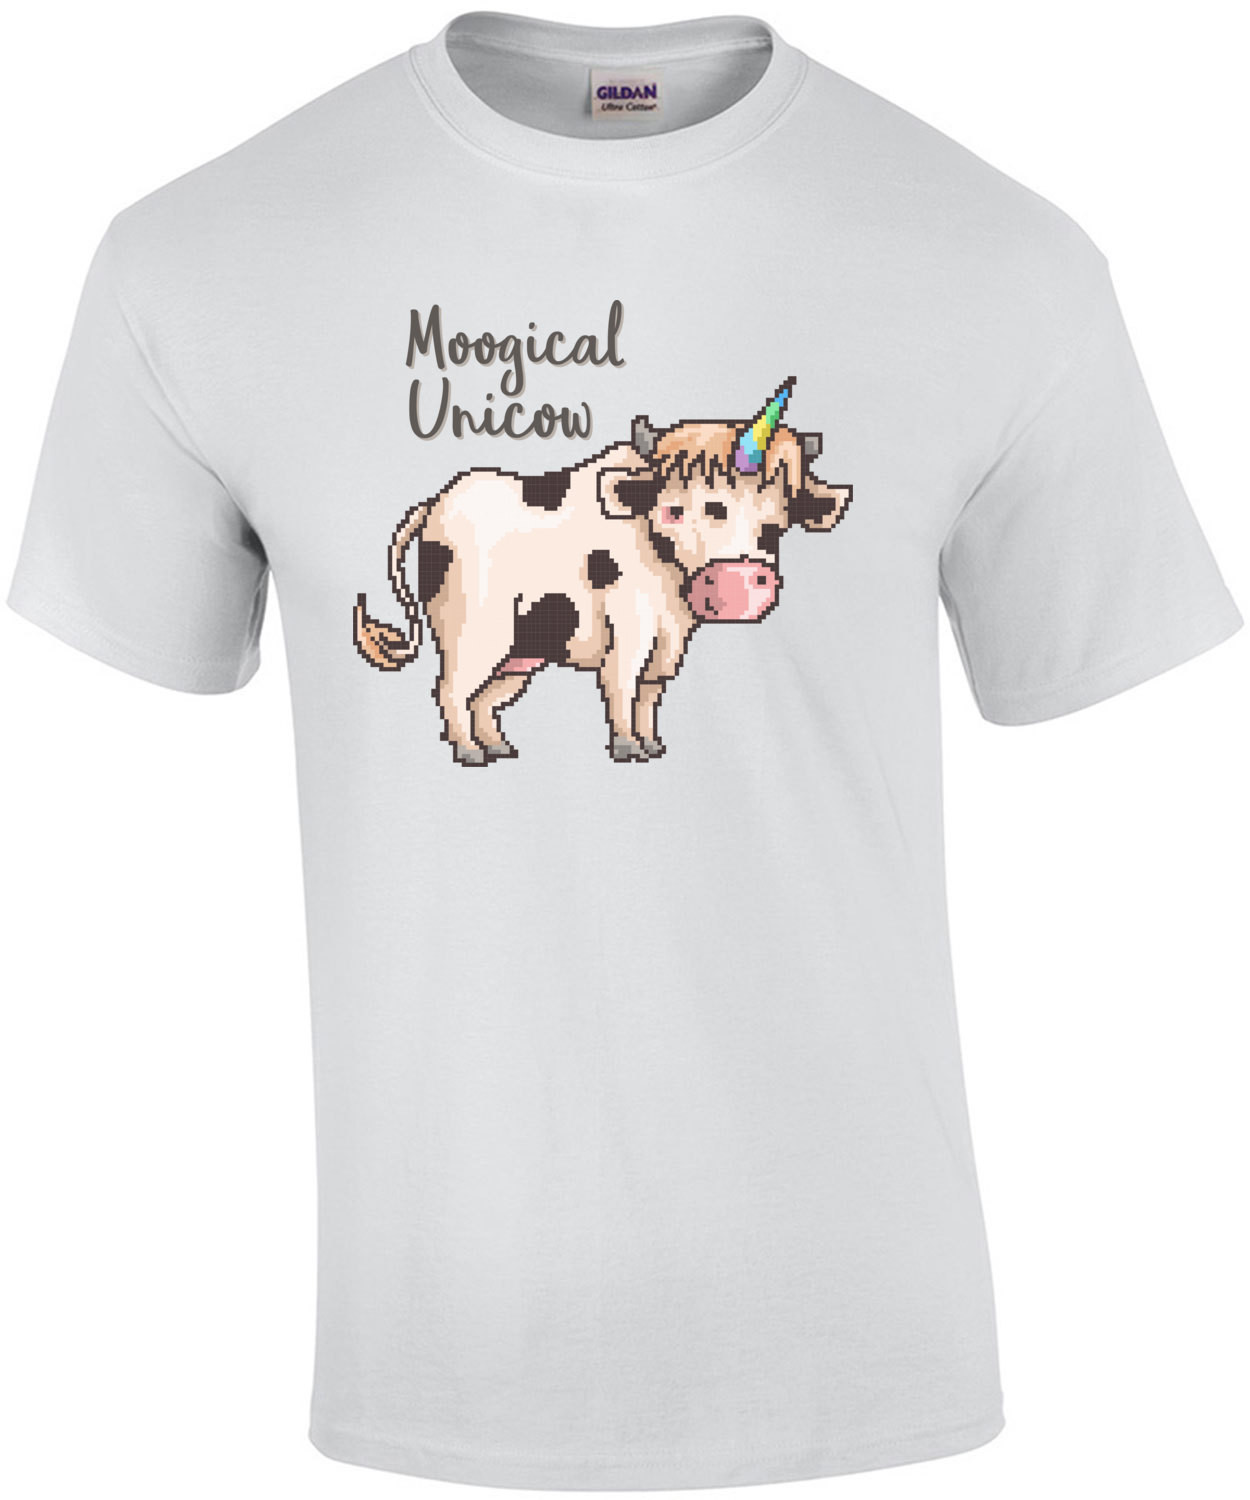 Moogical Unicow Cute T-Shirt